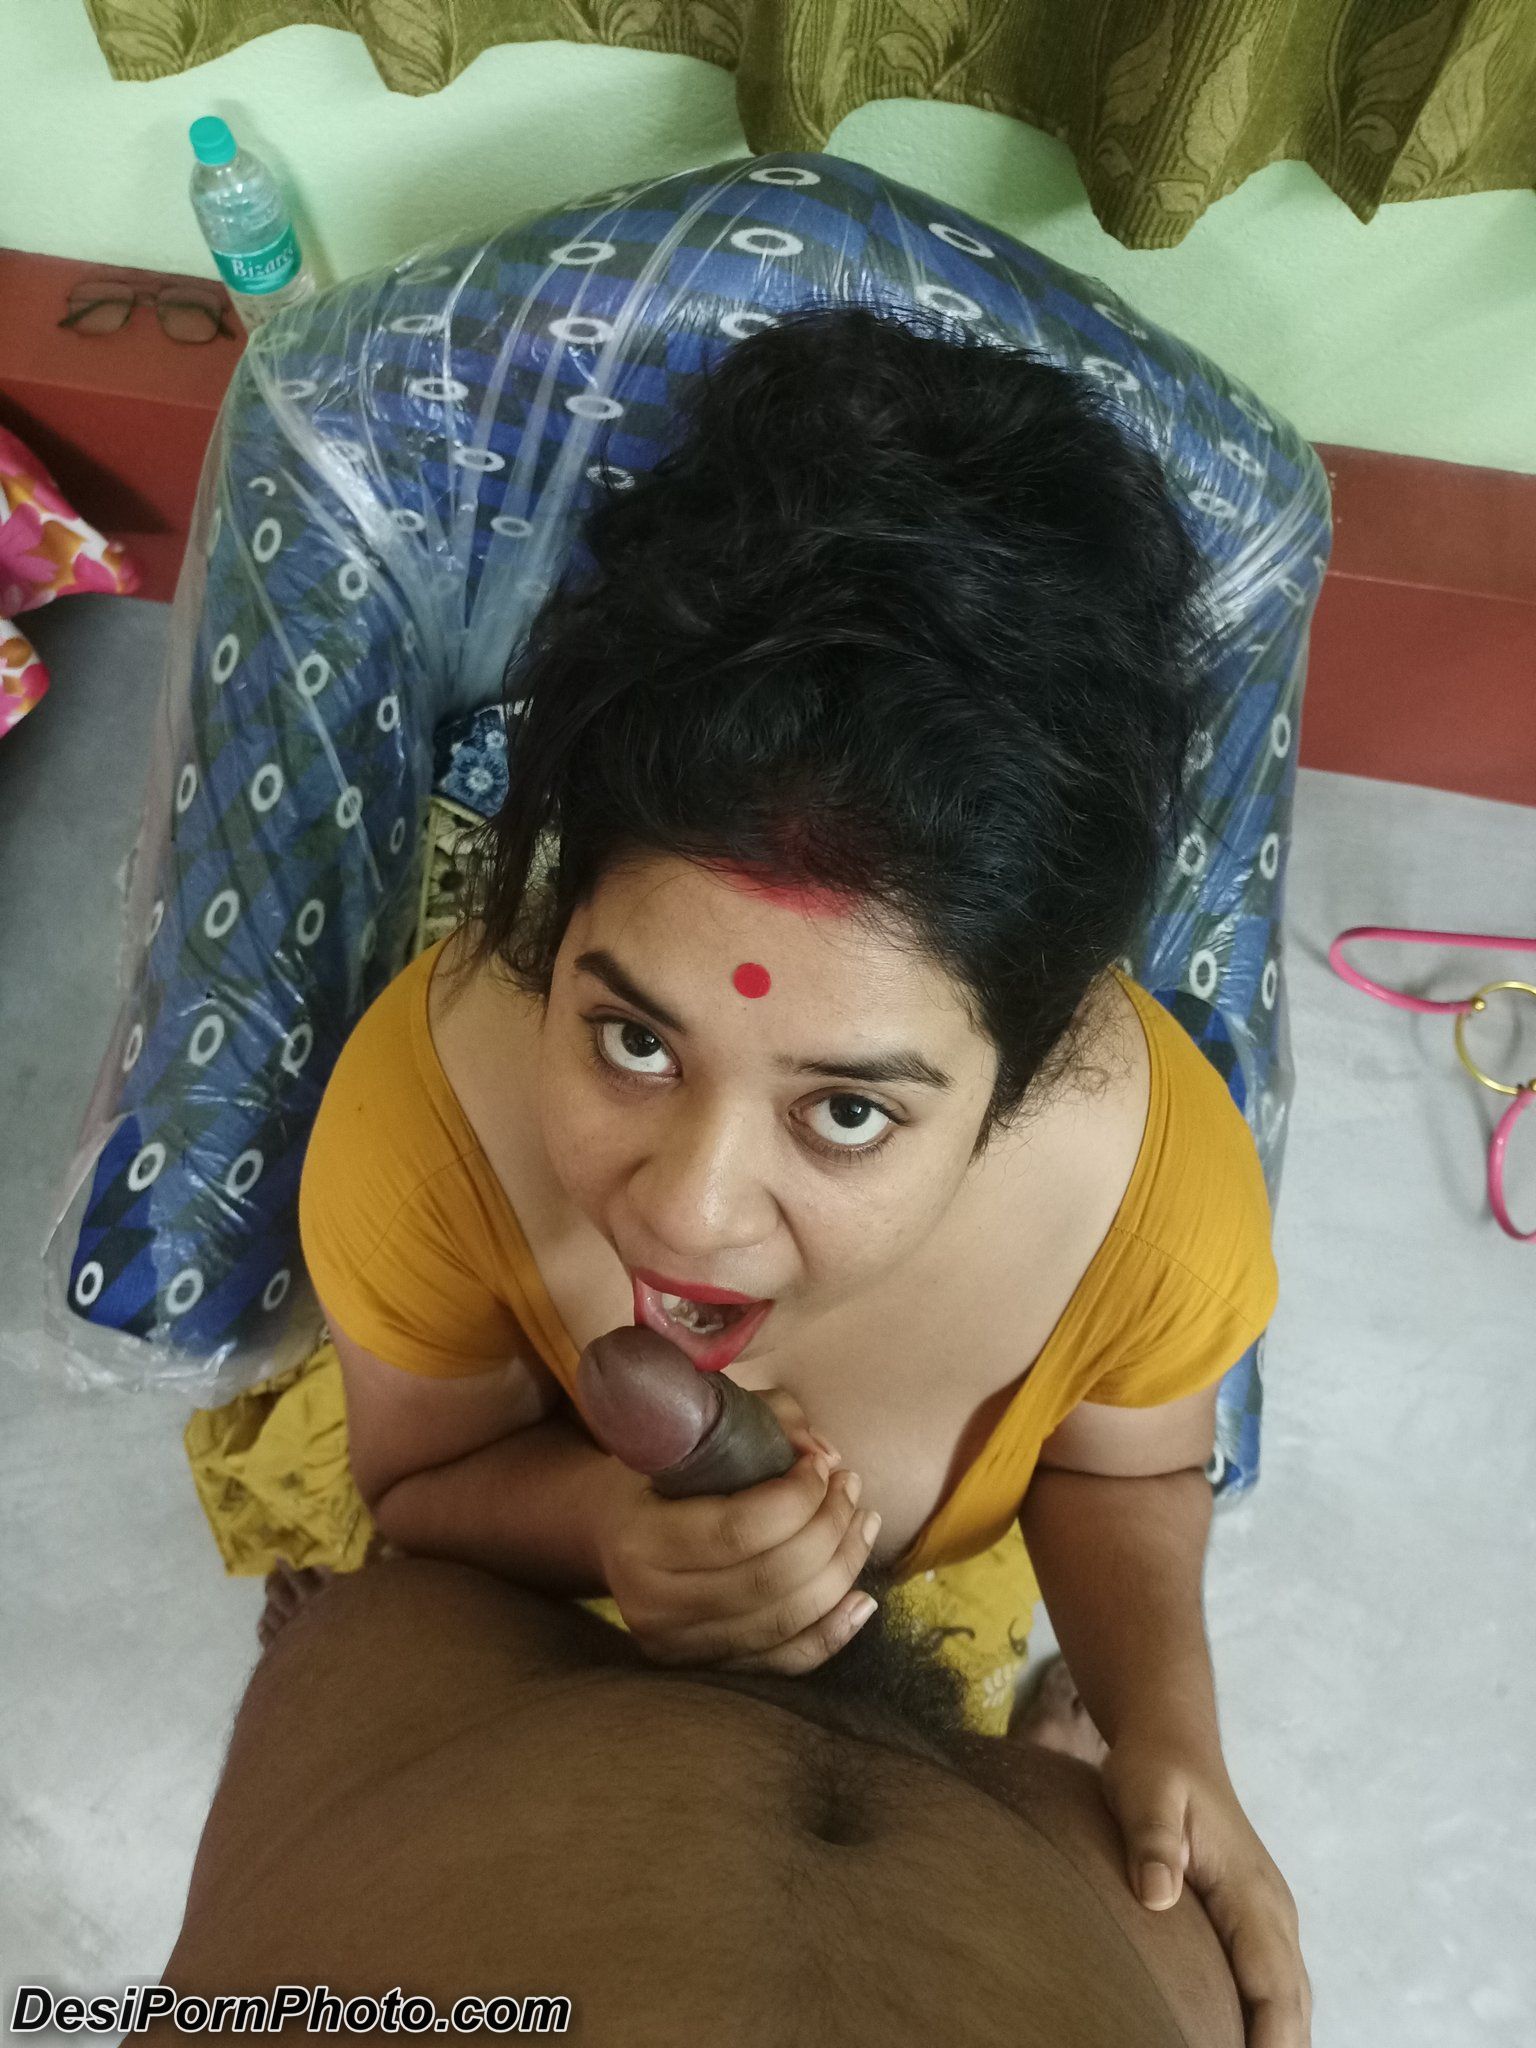 Www Antervasna Com - Hardcore sex photos - Indian nude girls, Indian sex